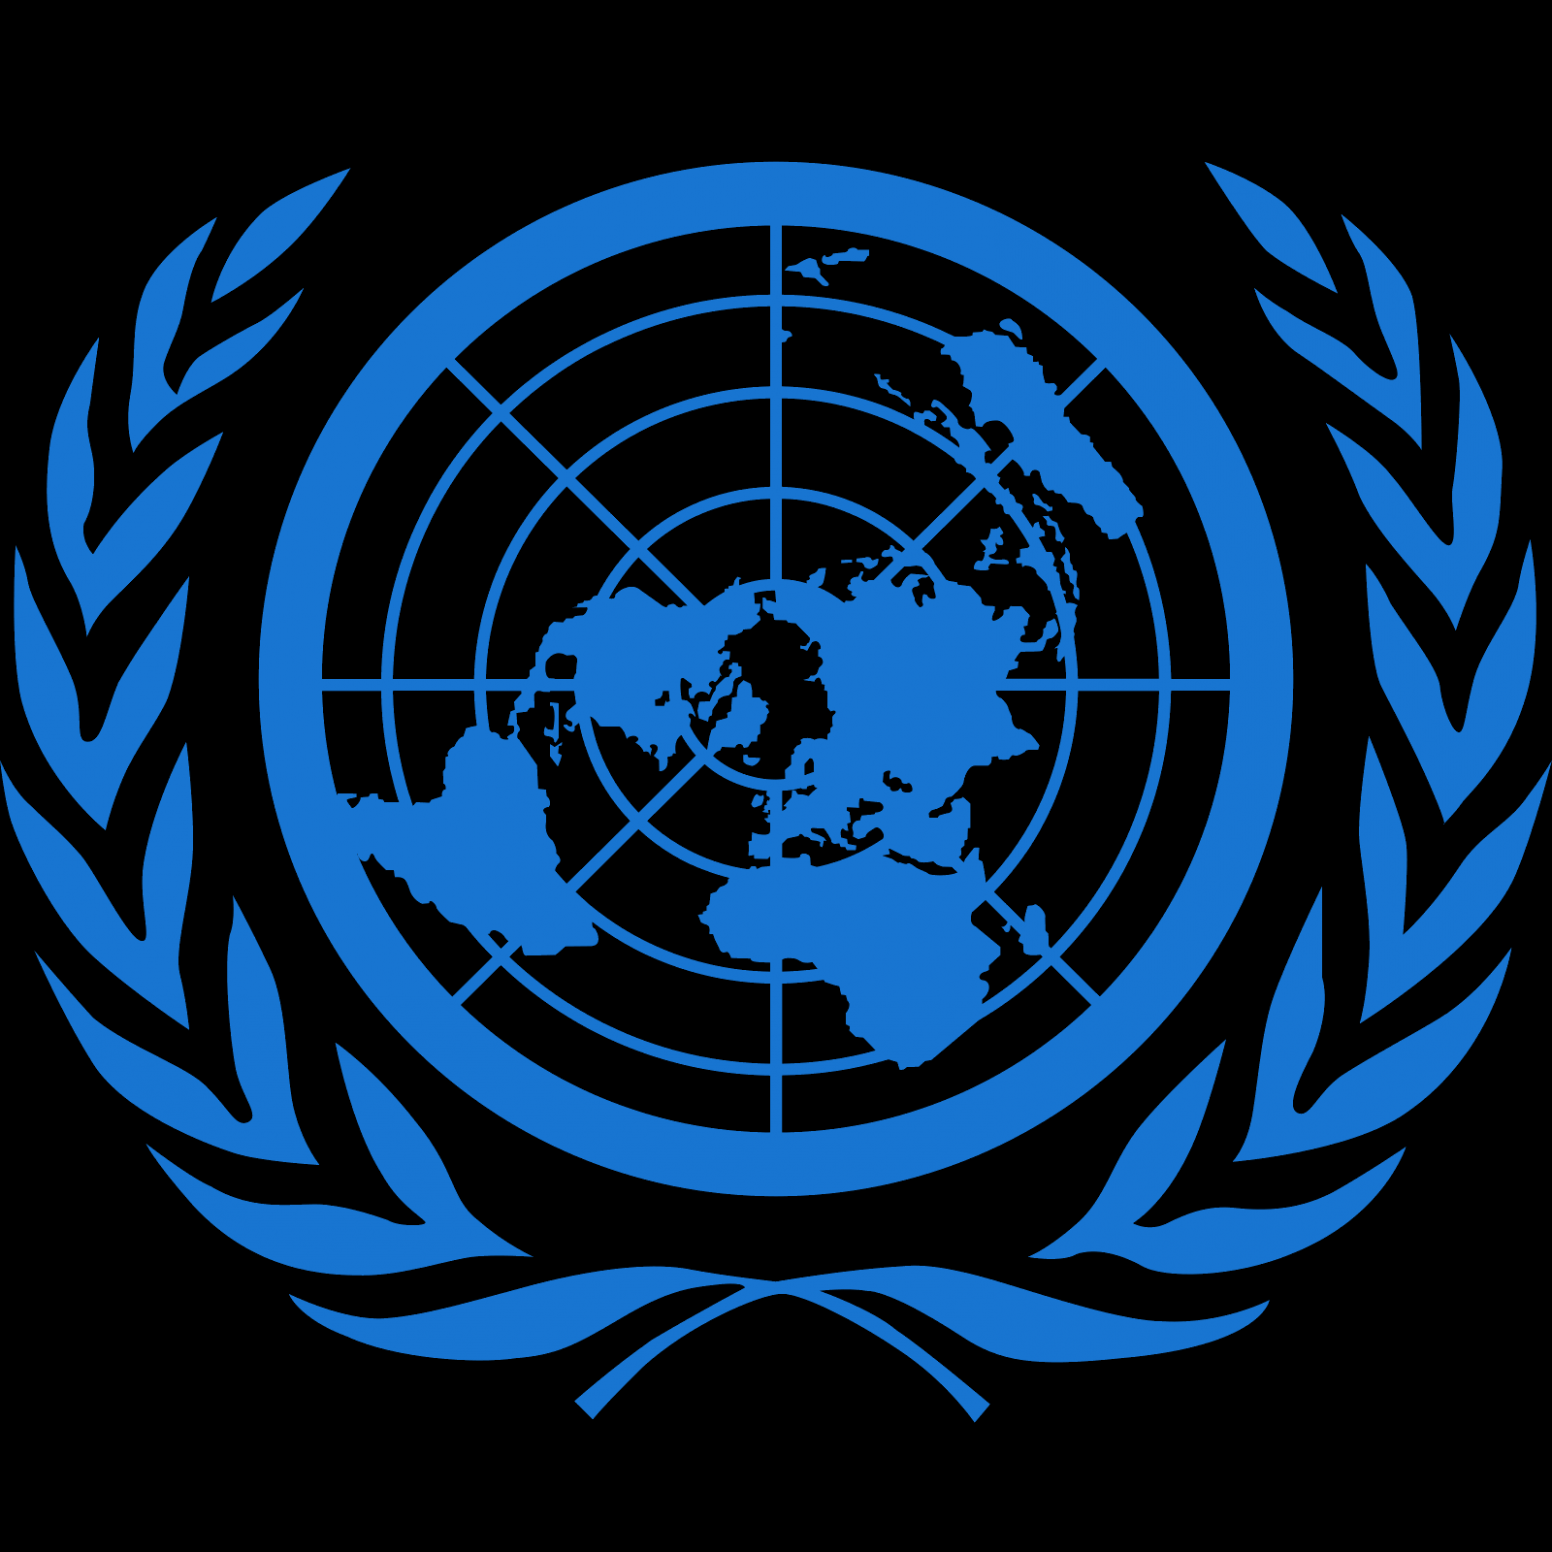 United Nations Command Logo